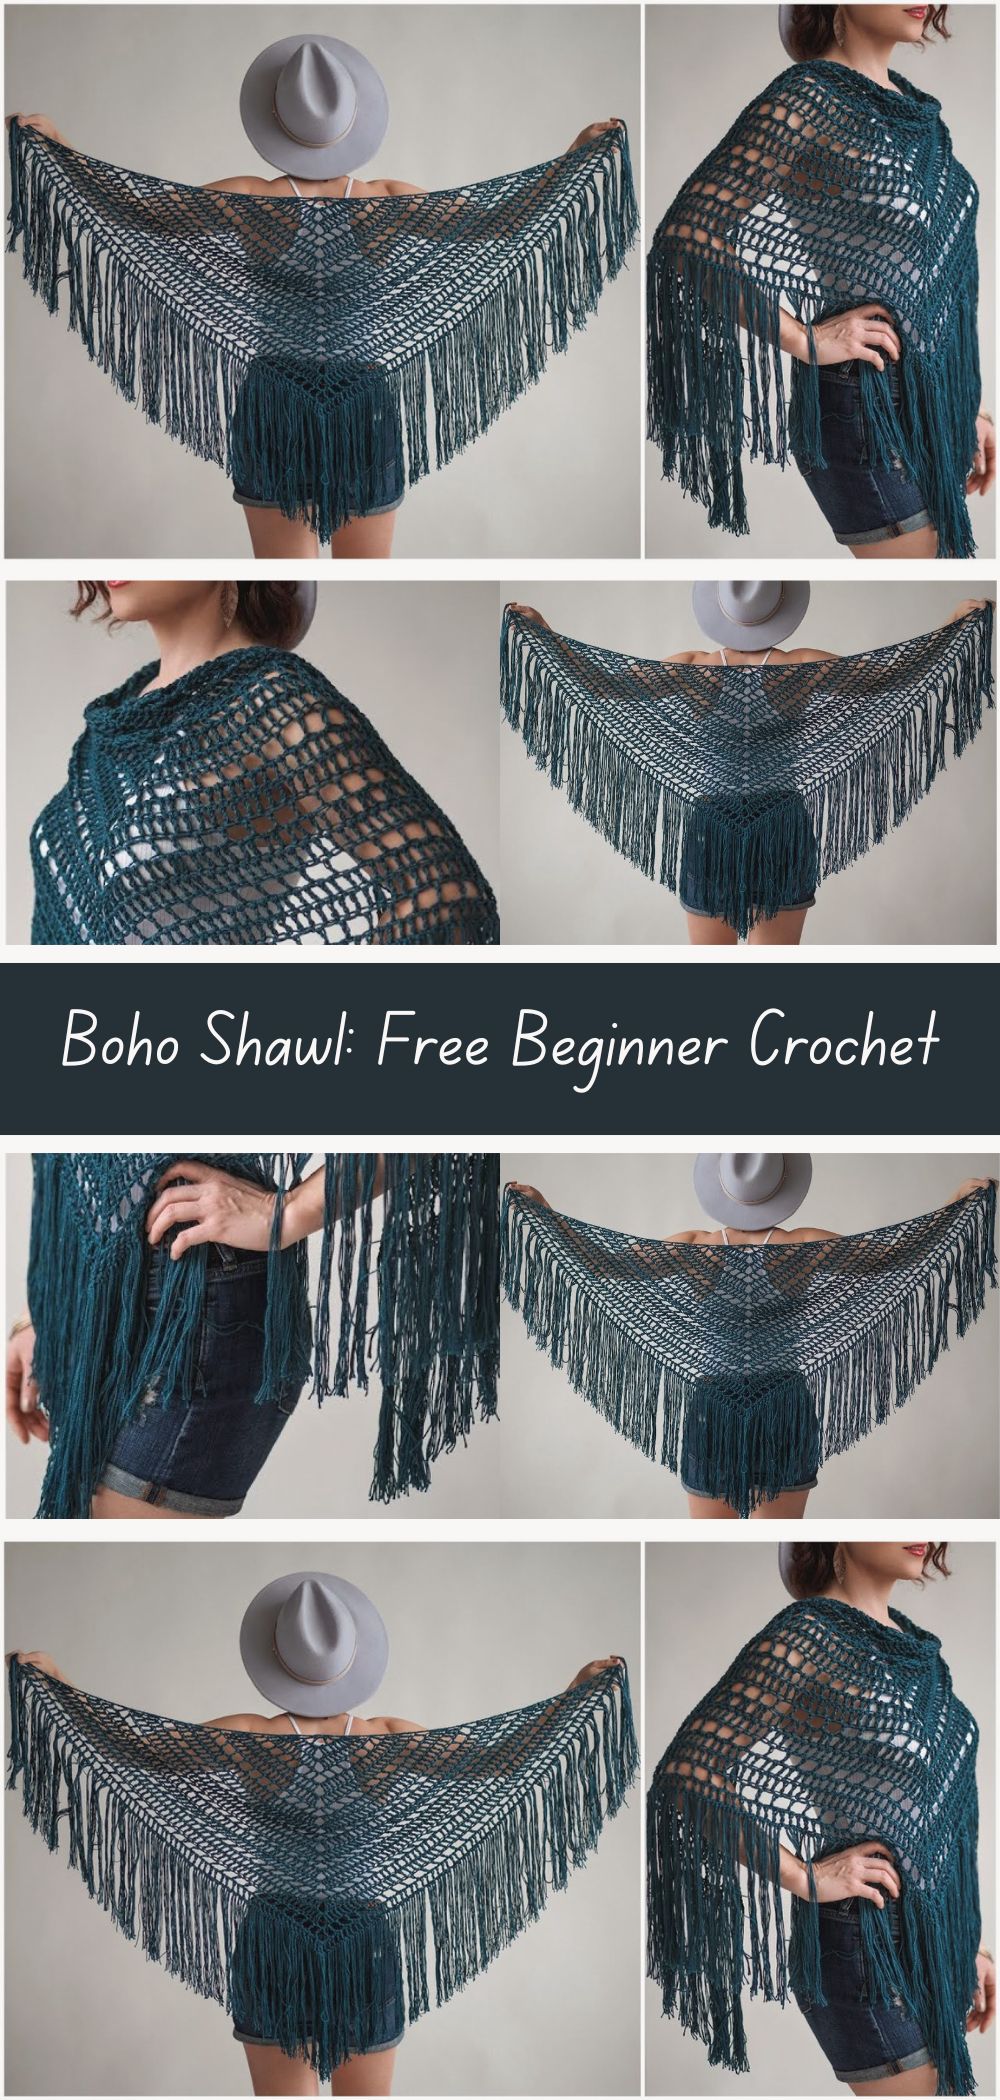 Boho Shawl: Free Beginner Crochet Pattern - Dive into crochet with this stylish and versatile shawl pattern